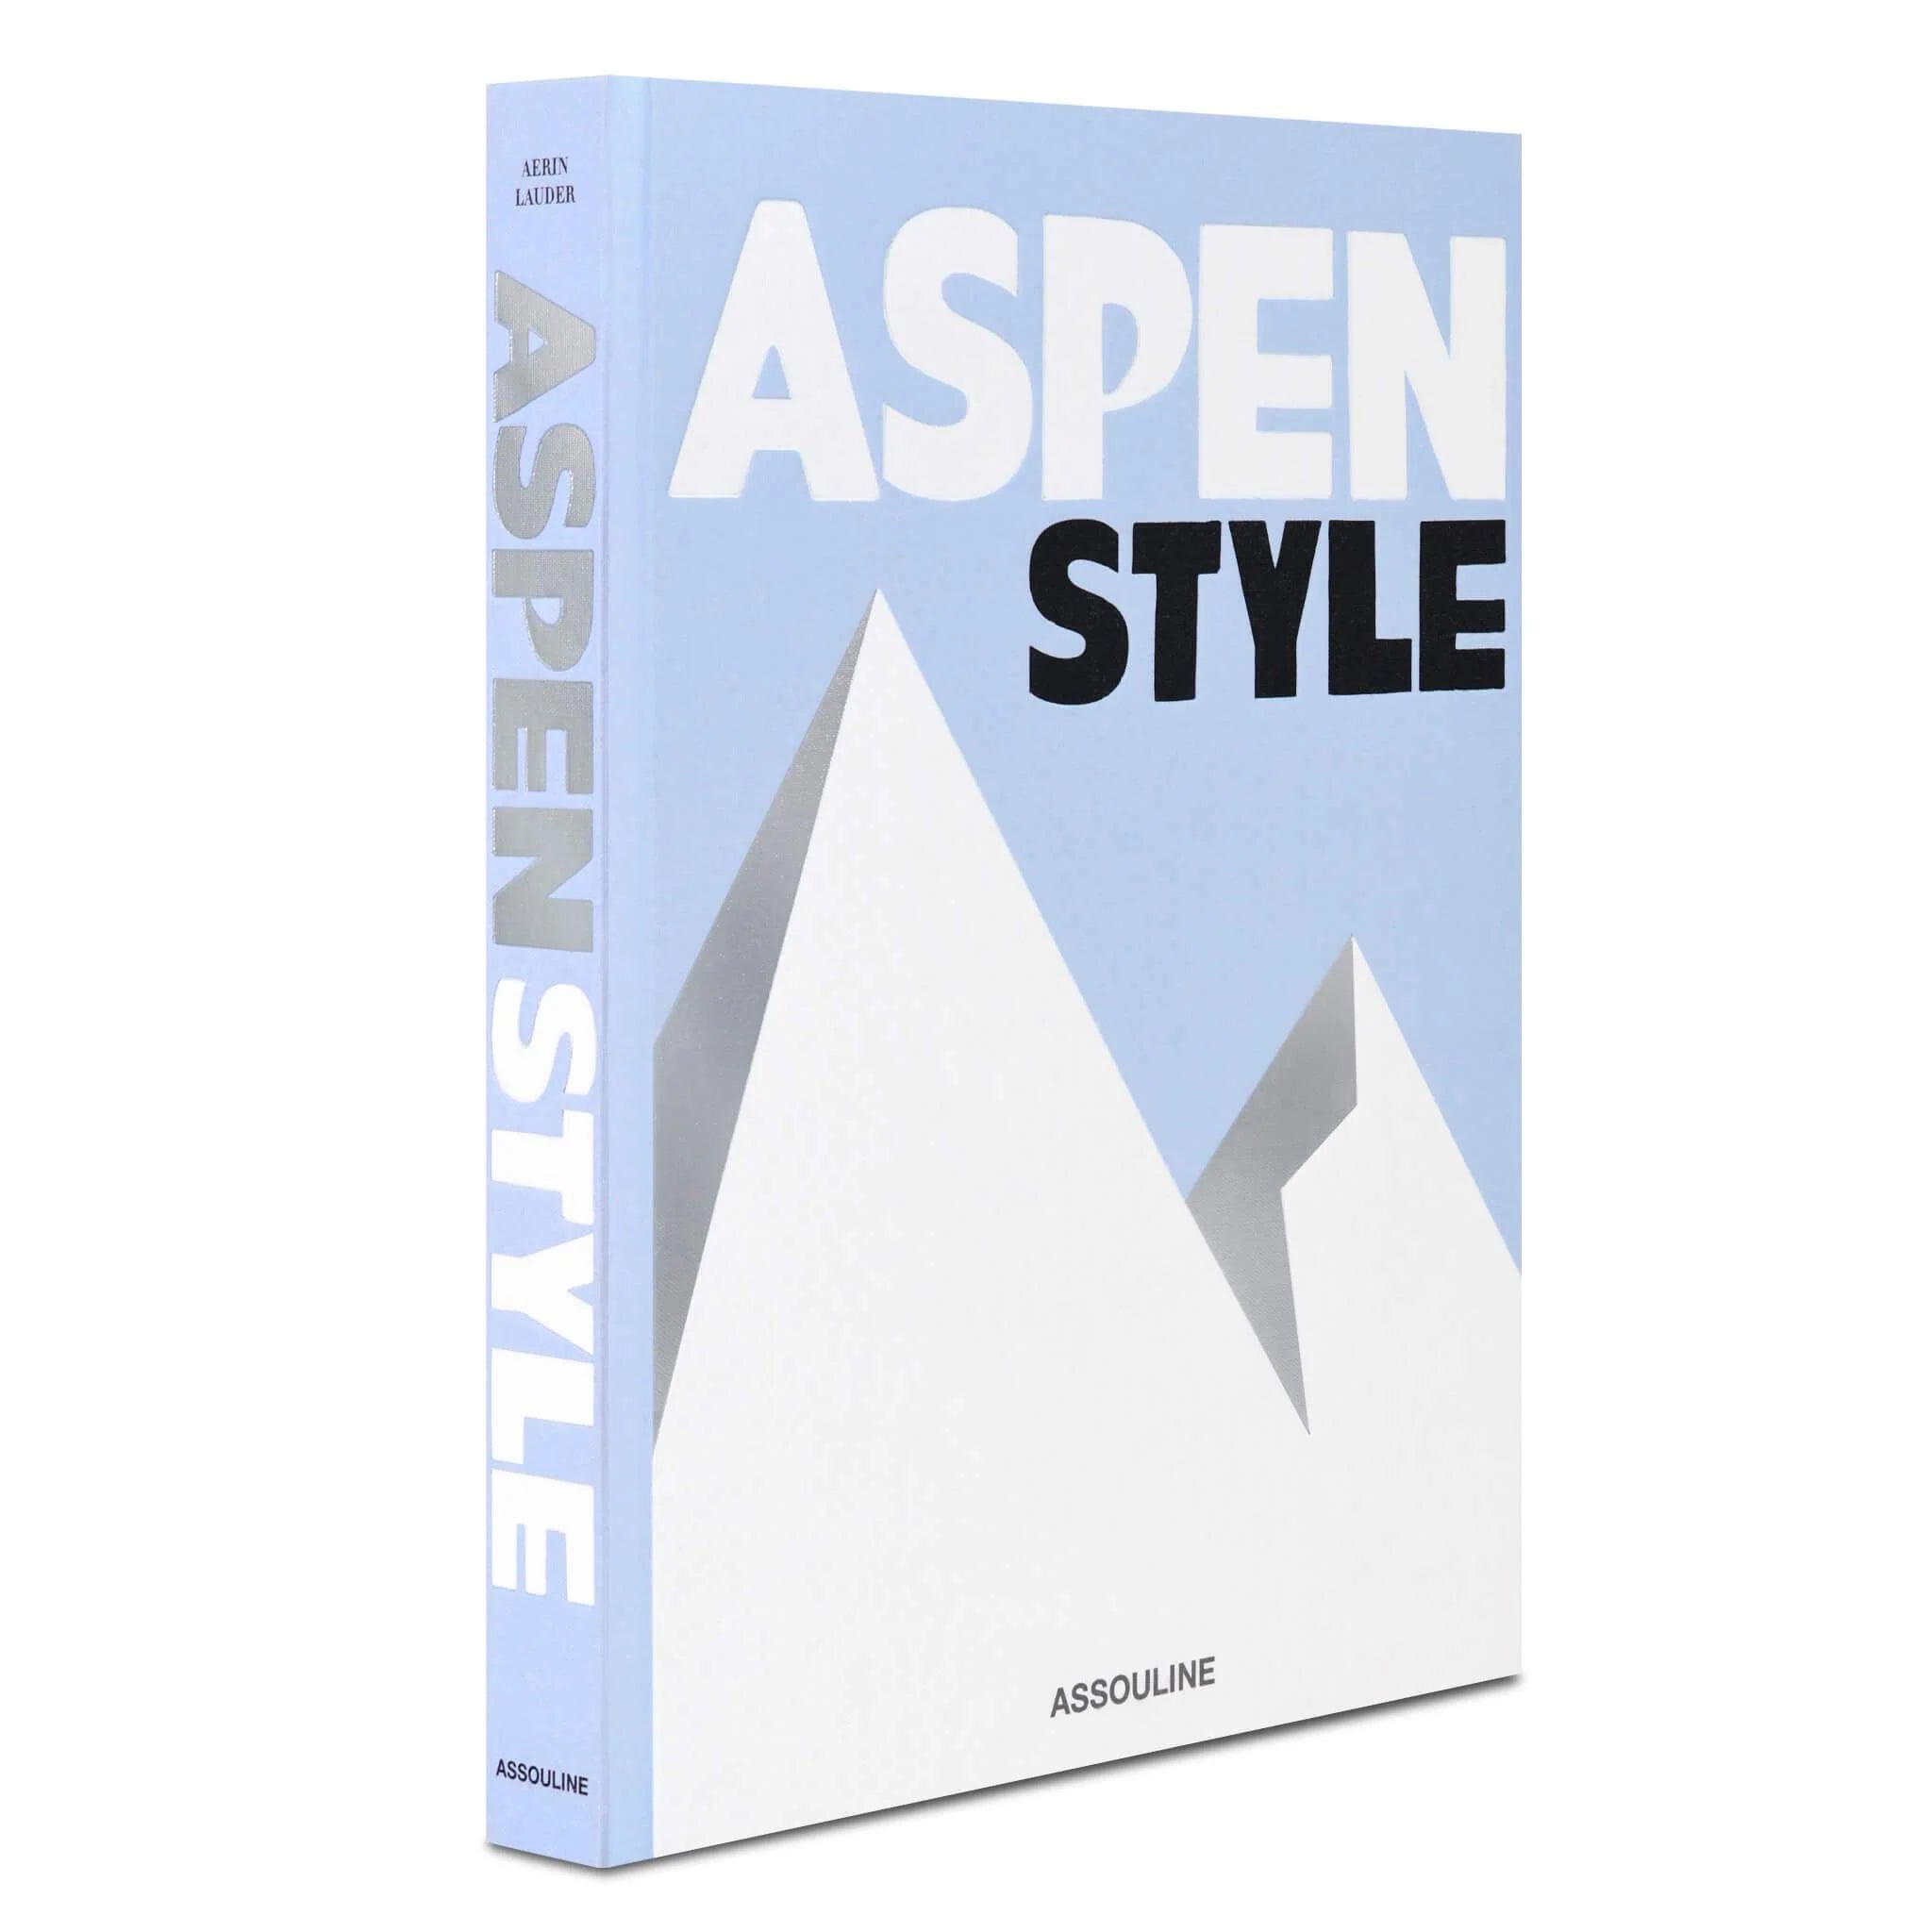 ASPEN STYLE, libro decorativo sobre viajes de la editorial Assouline